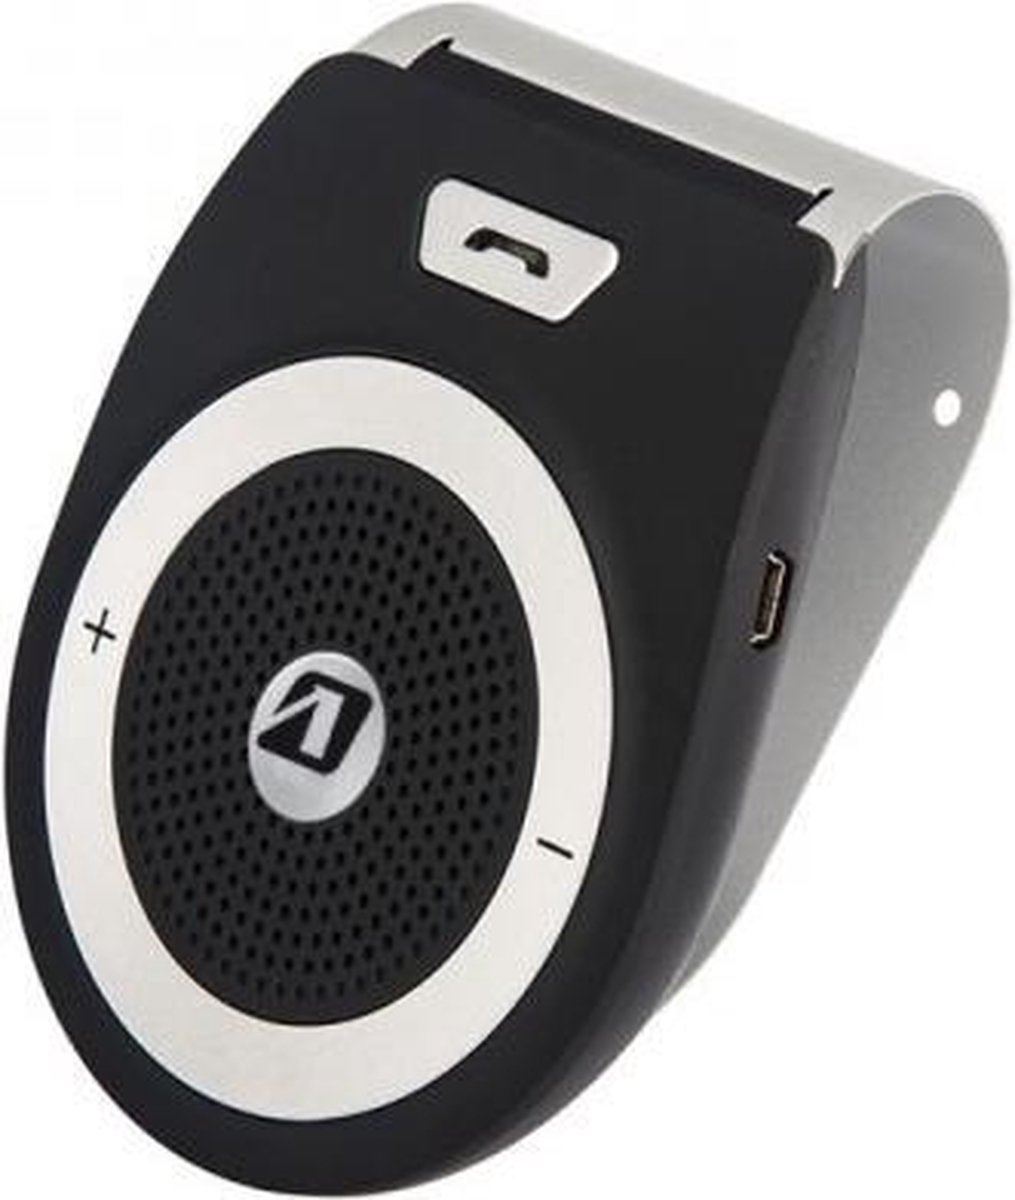 *ADJ 110-00051 Live Bluetooth Speaker SP812 [3w Compatible with Phone, iPad,Smartphone,tablet Black]